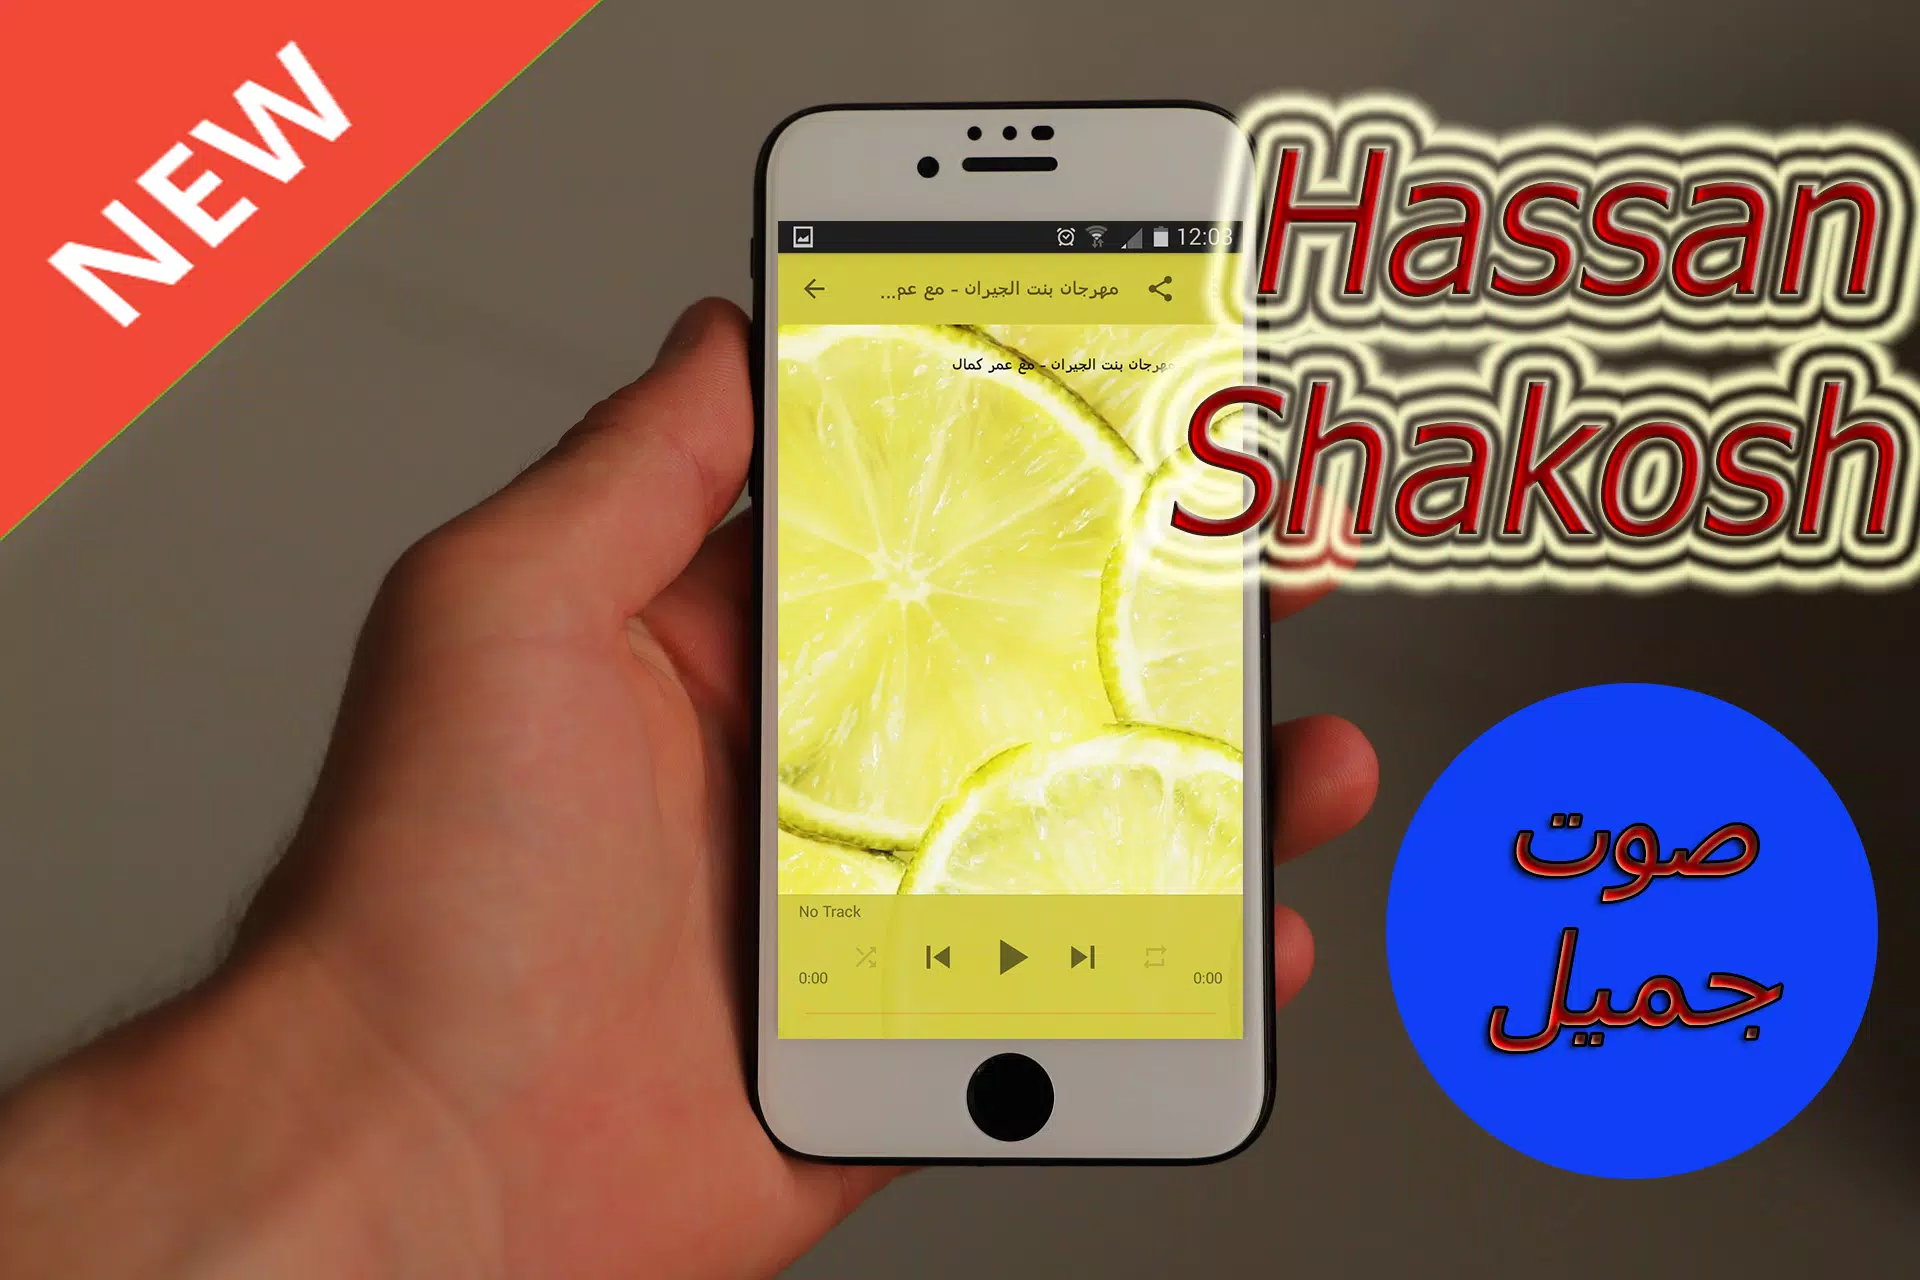 Hassan Shakosh 2021 أغاني لحسن شاكوش APK pour Android Télécharger